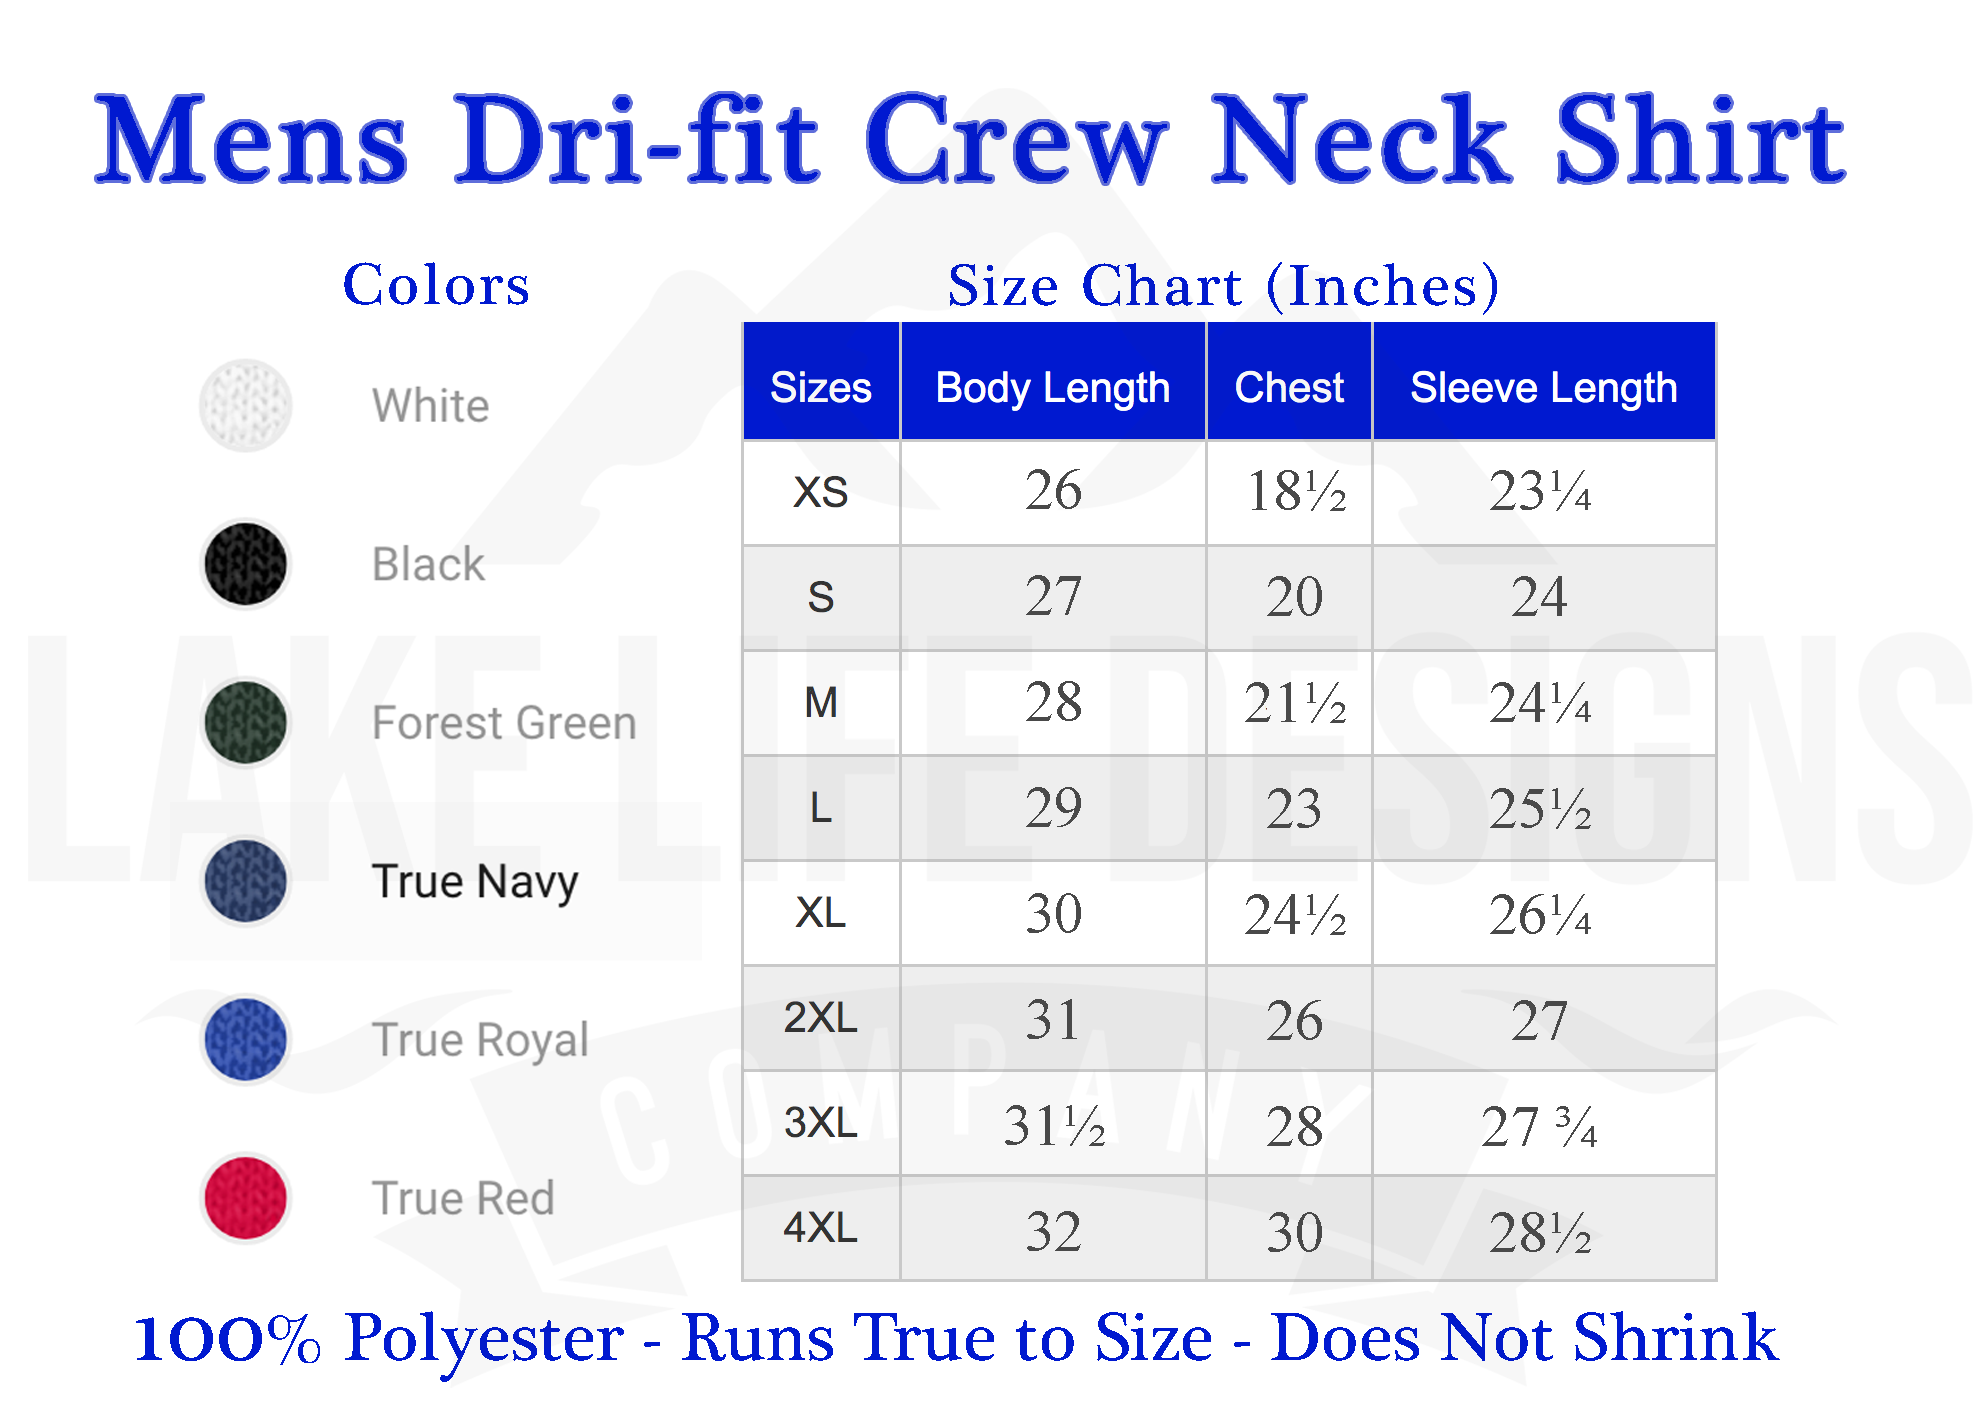 Lake Martin Dri-fit Boating Shirt - Breathable Material- Men's Long sleeve Moisture Wicking Tee - Alabama Lake